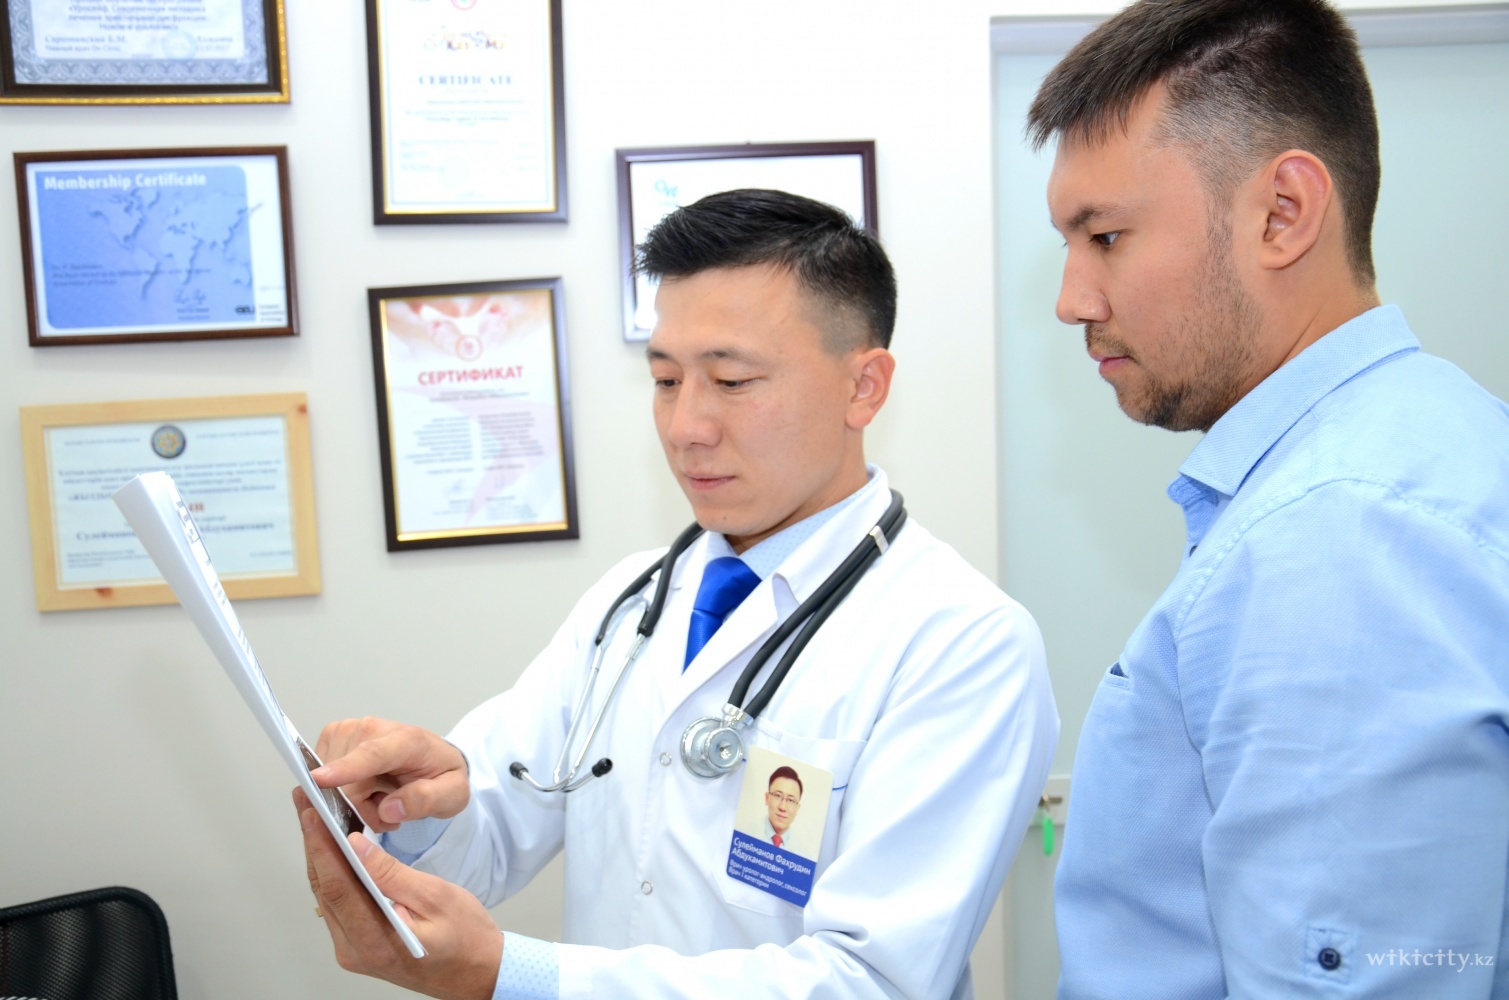 Фото On Clinic - Almaty. Врач уролог-андролог, сексолог Сулейманов Фахрудин Абдухамитович во время консультации с пациентом